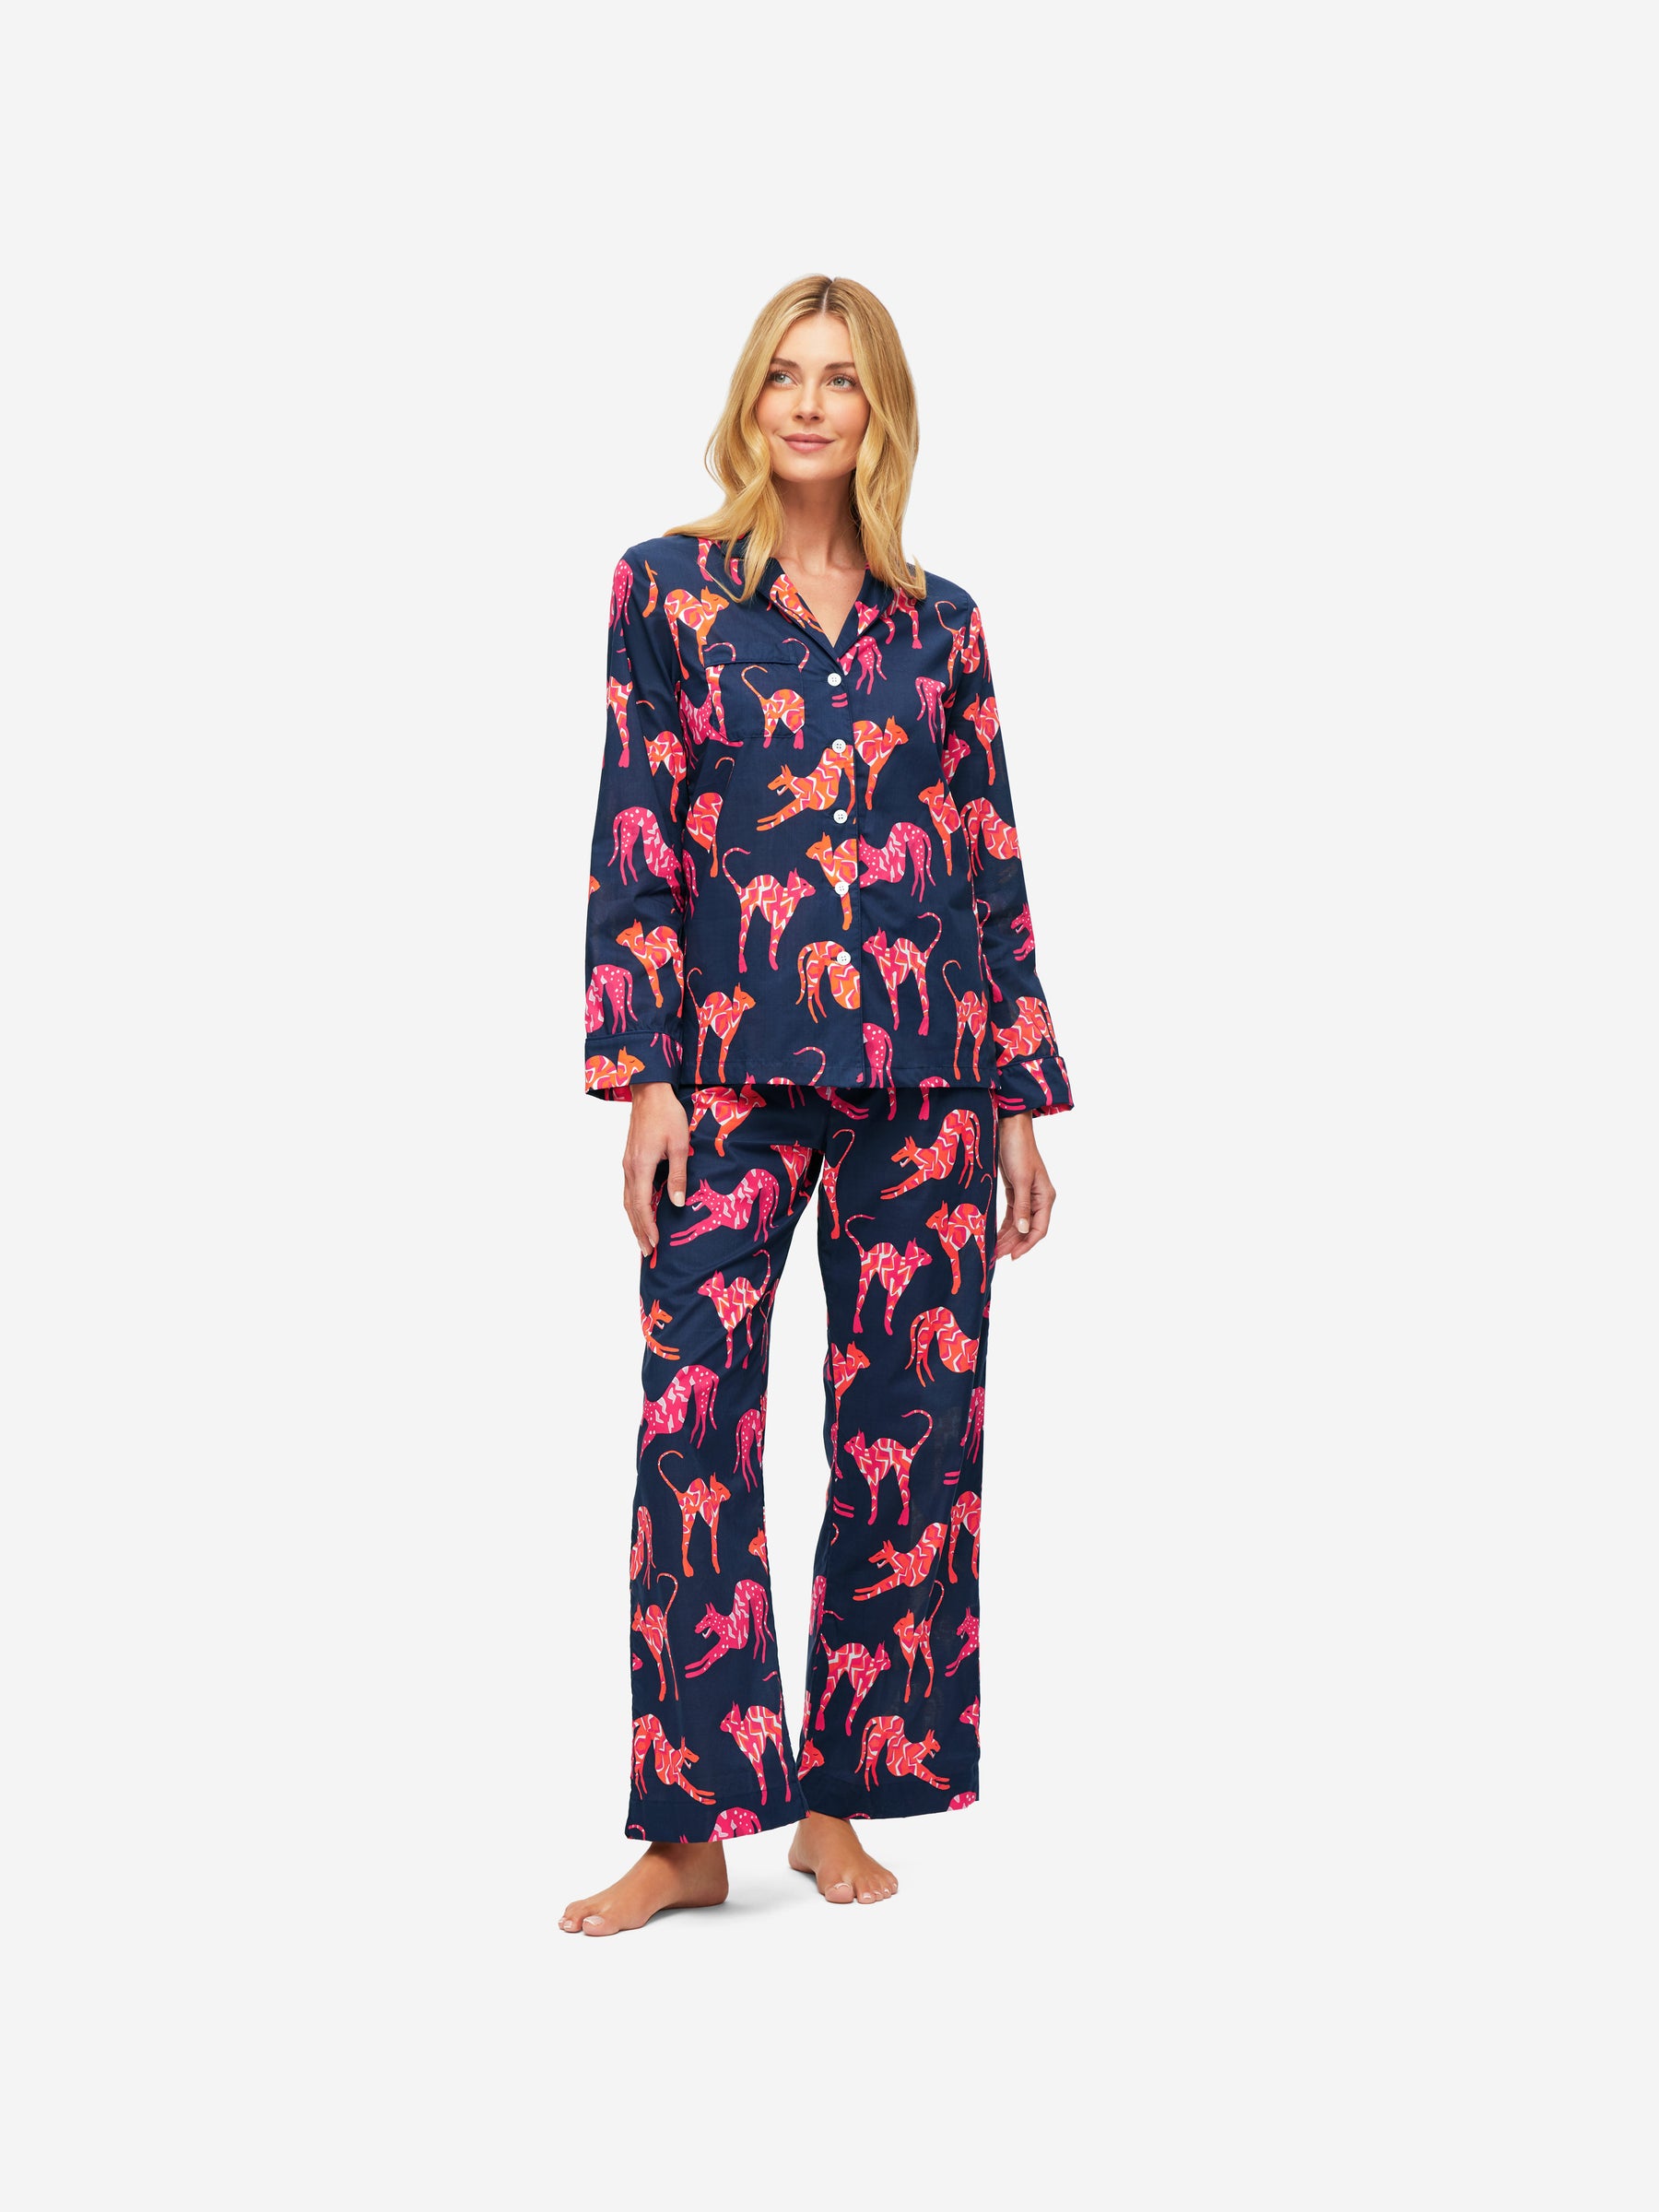 Women's Pyjamas Ledbury 52 Cotton Batiste Multi